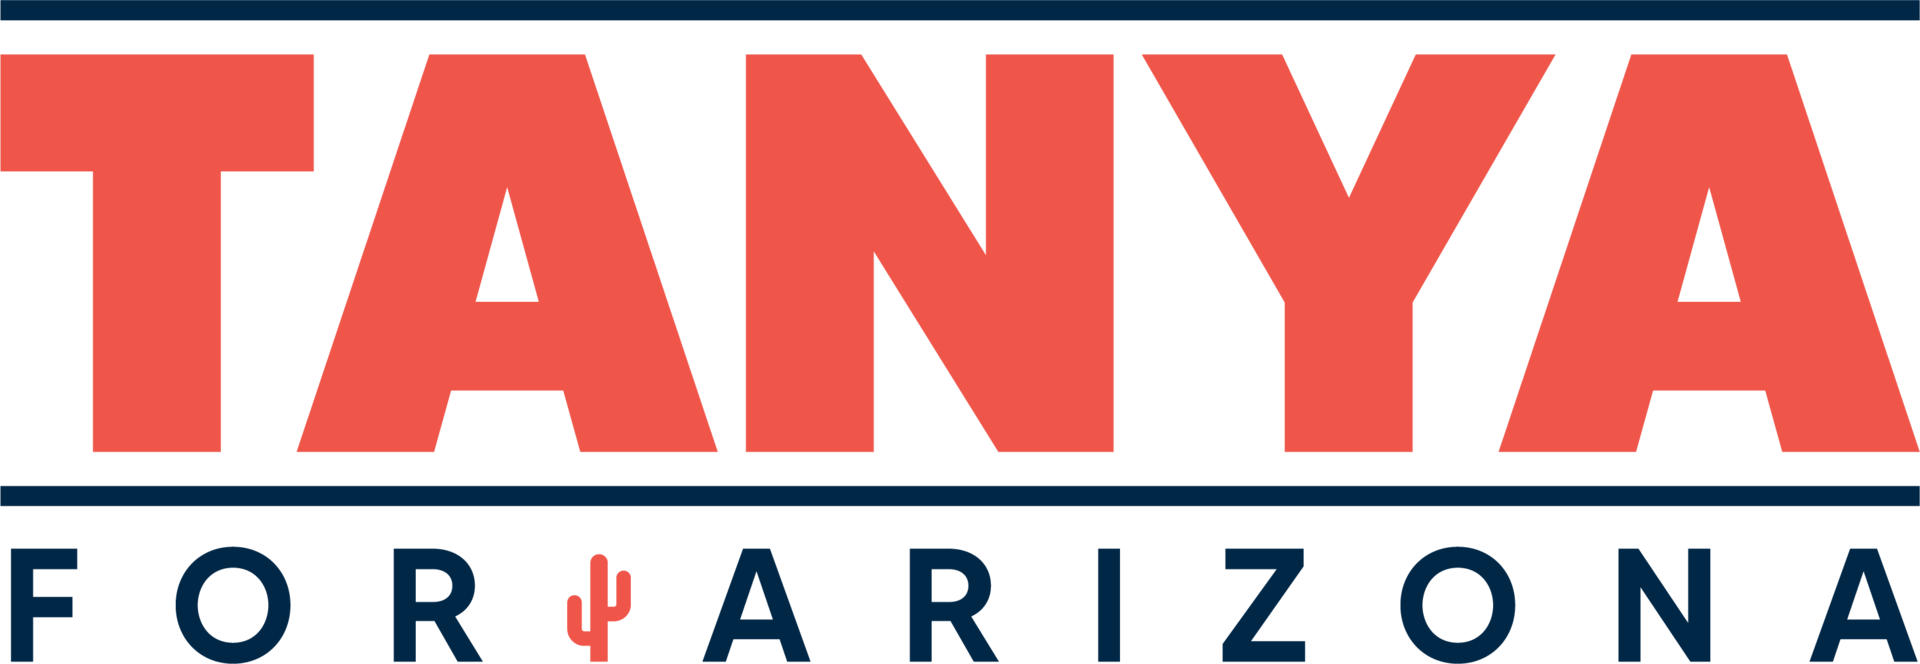 Tanya for arizona logo